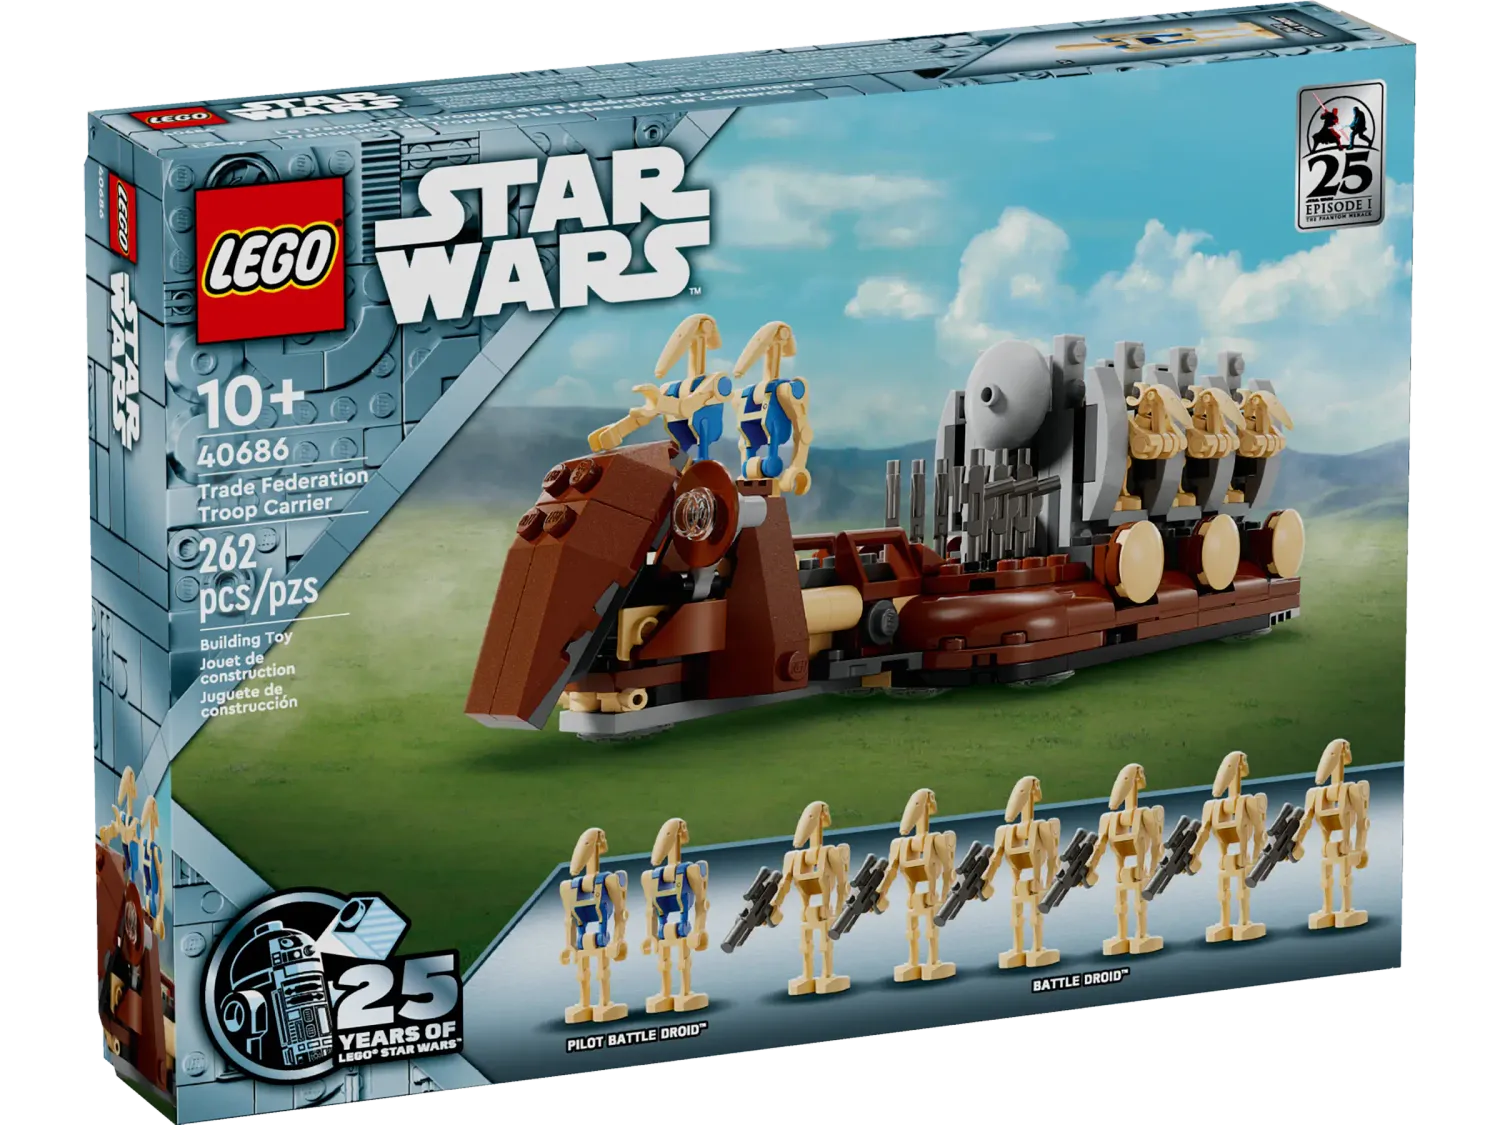 LEGO Star Wars 40686 - Trade Federation Troop Carrier